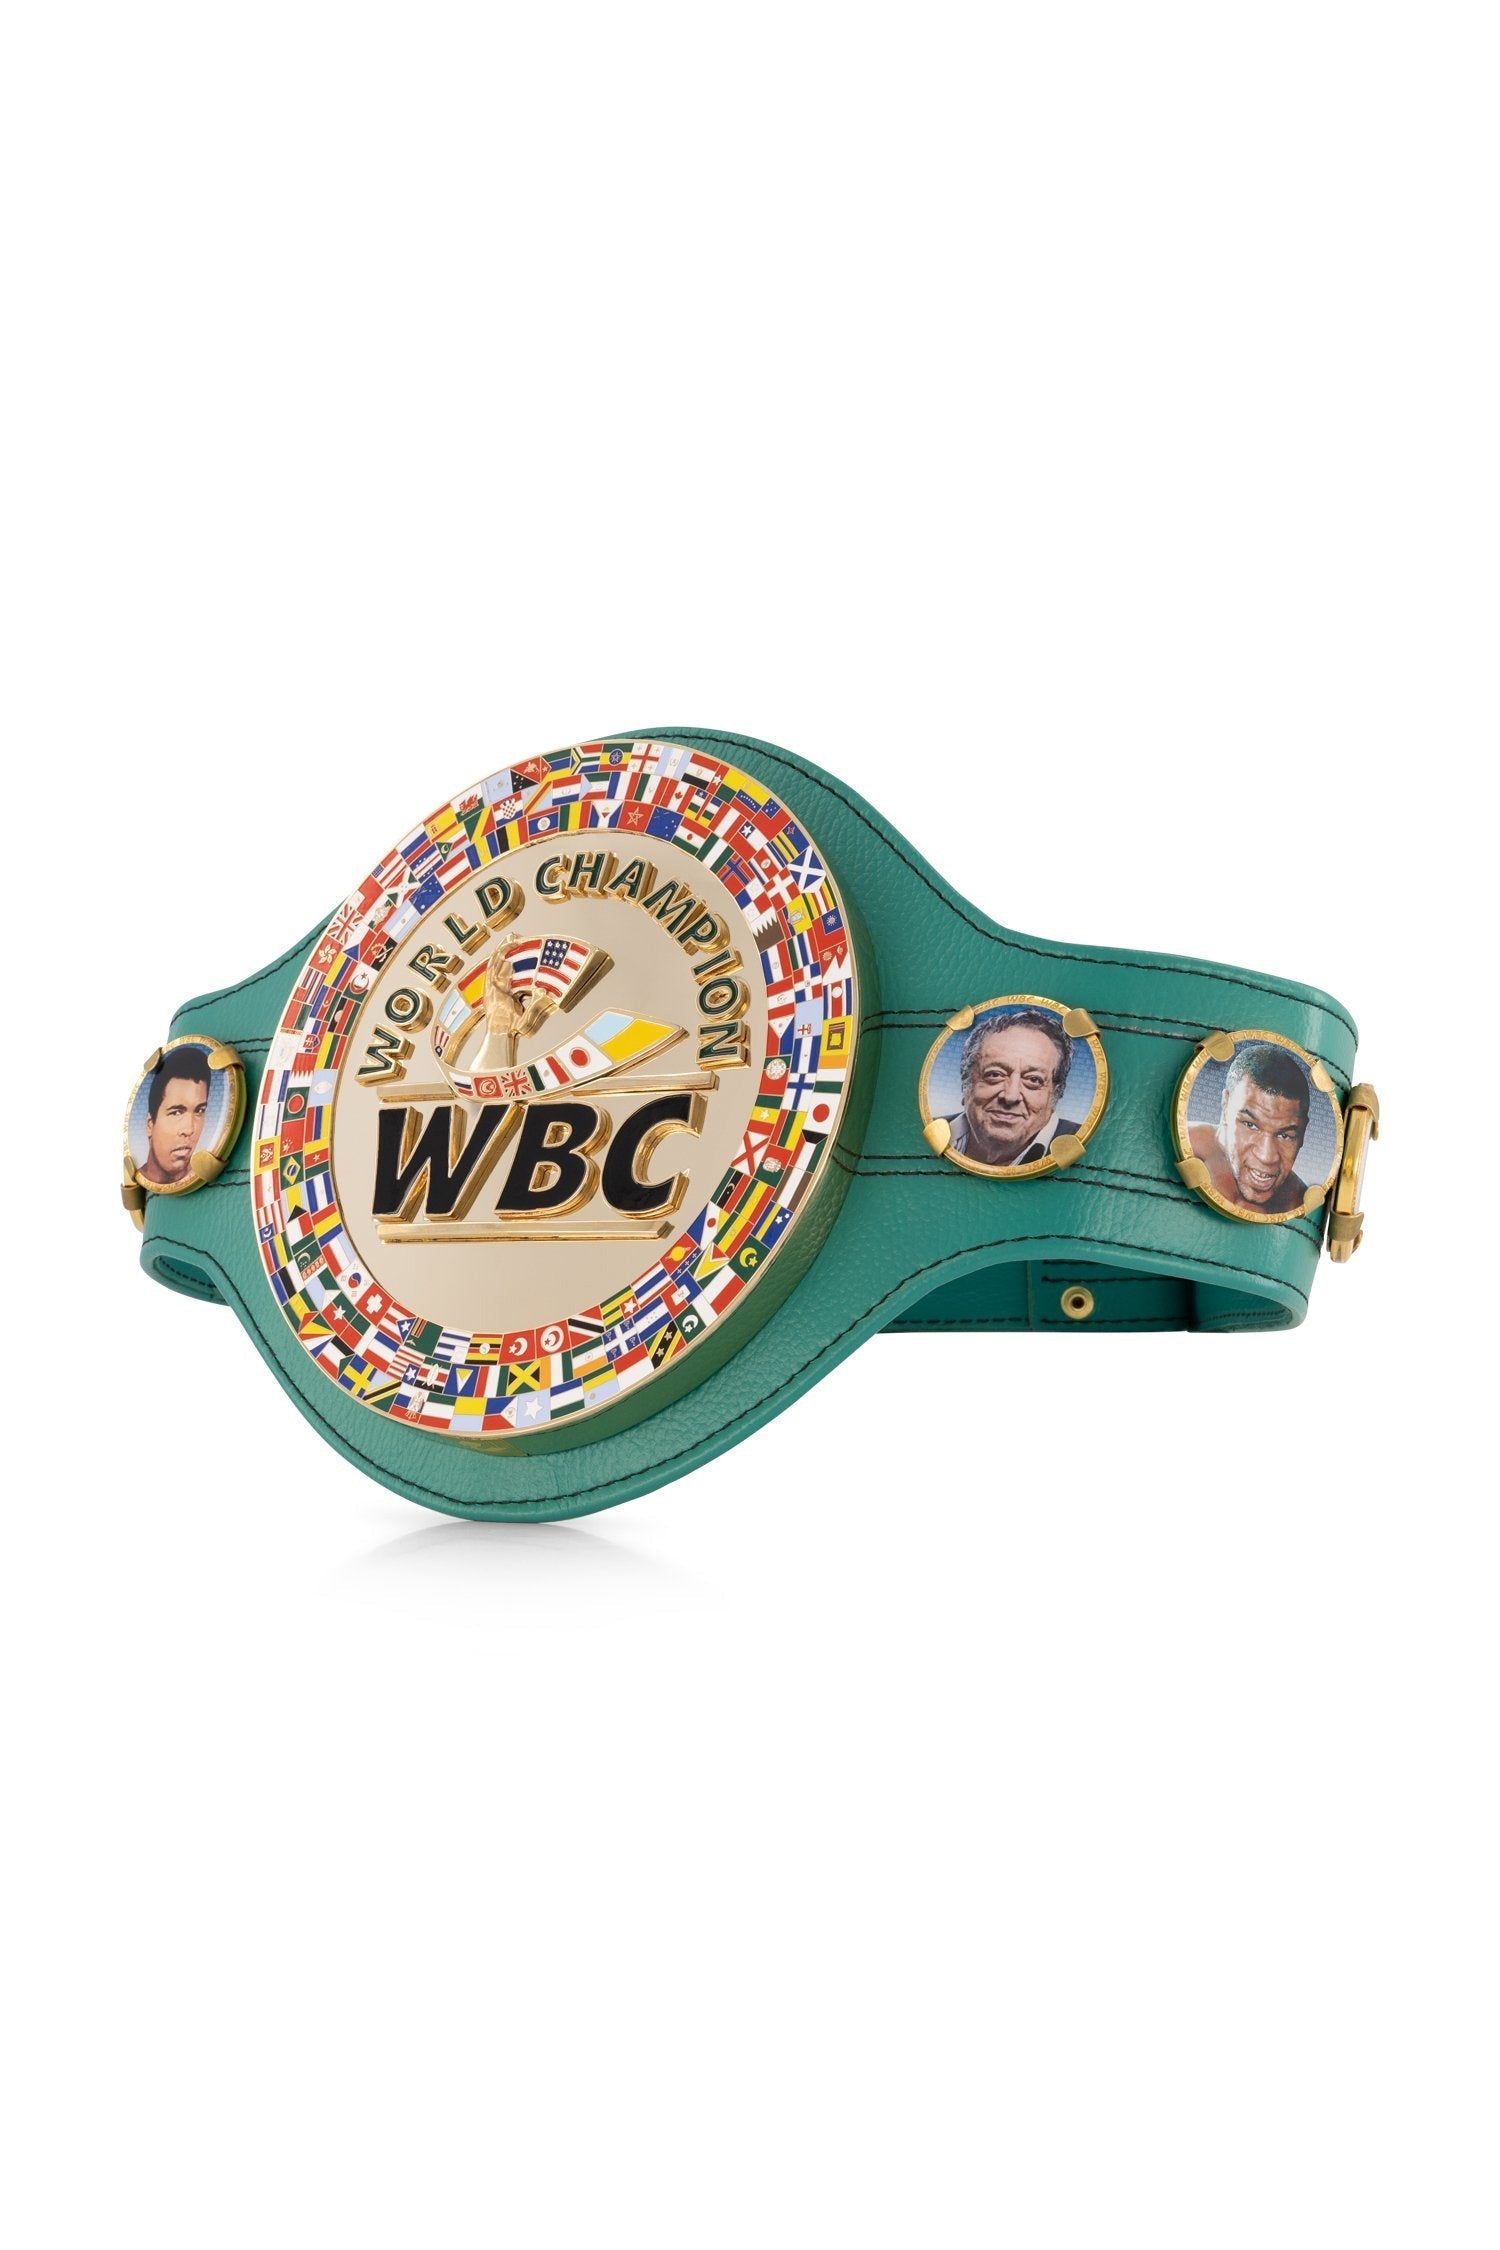 WBC Store Replica Belts WBC Championship Belt  "Historic Fights" Evander Holyfield vs. Mike Tyson